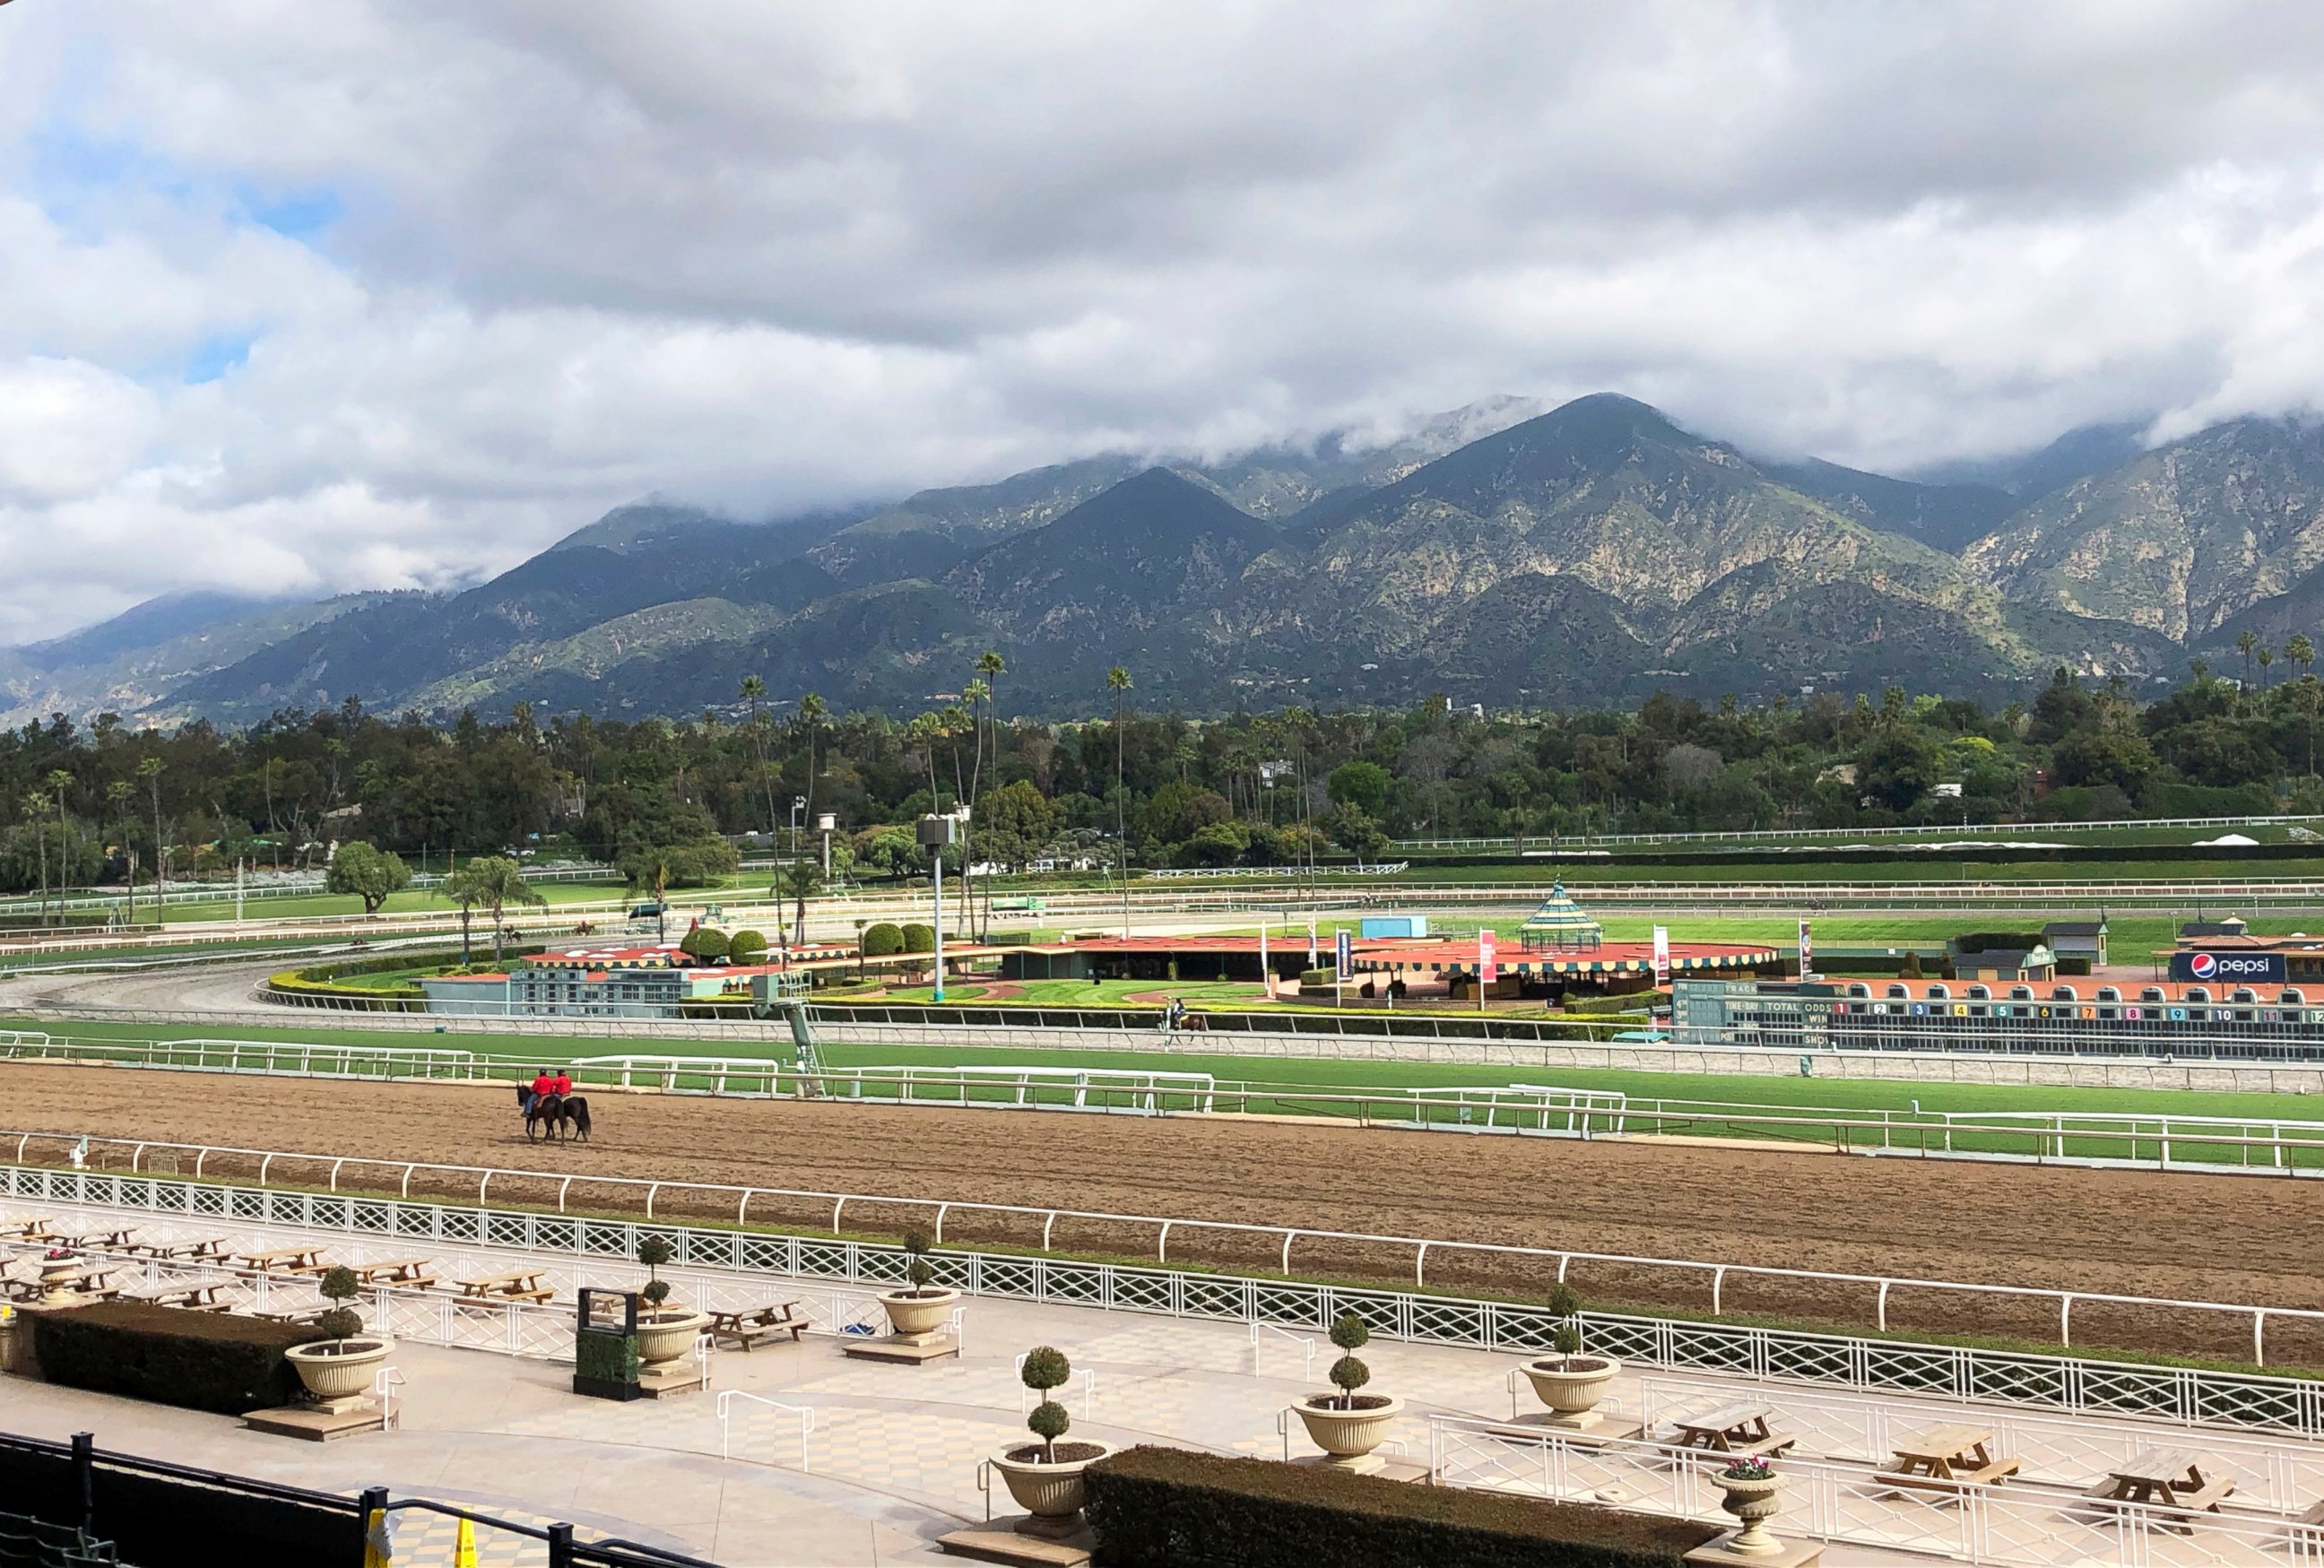 Santa Anita racetrack reopening after 22 horses died